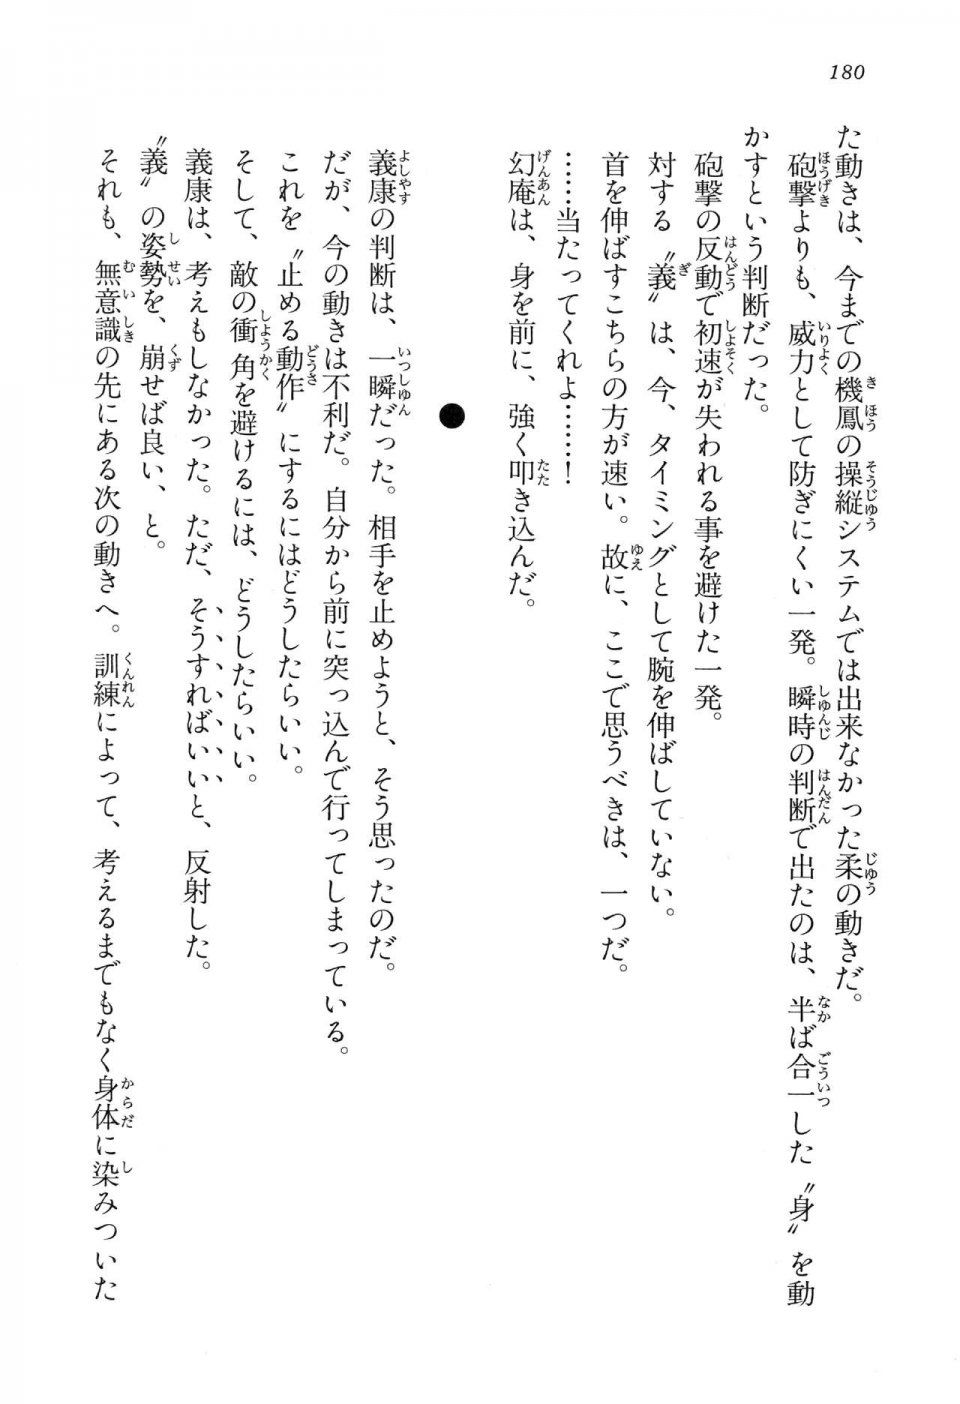 Kyoukai Senjou no Horizon LN Vol 15(6C) Part 1 - Photo #180